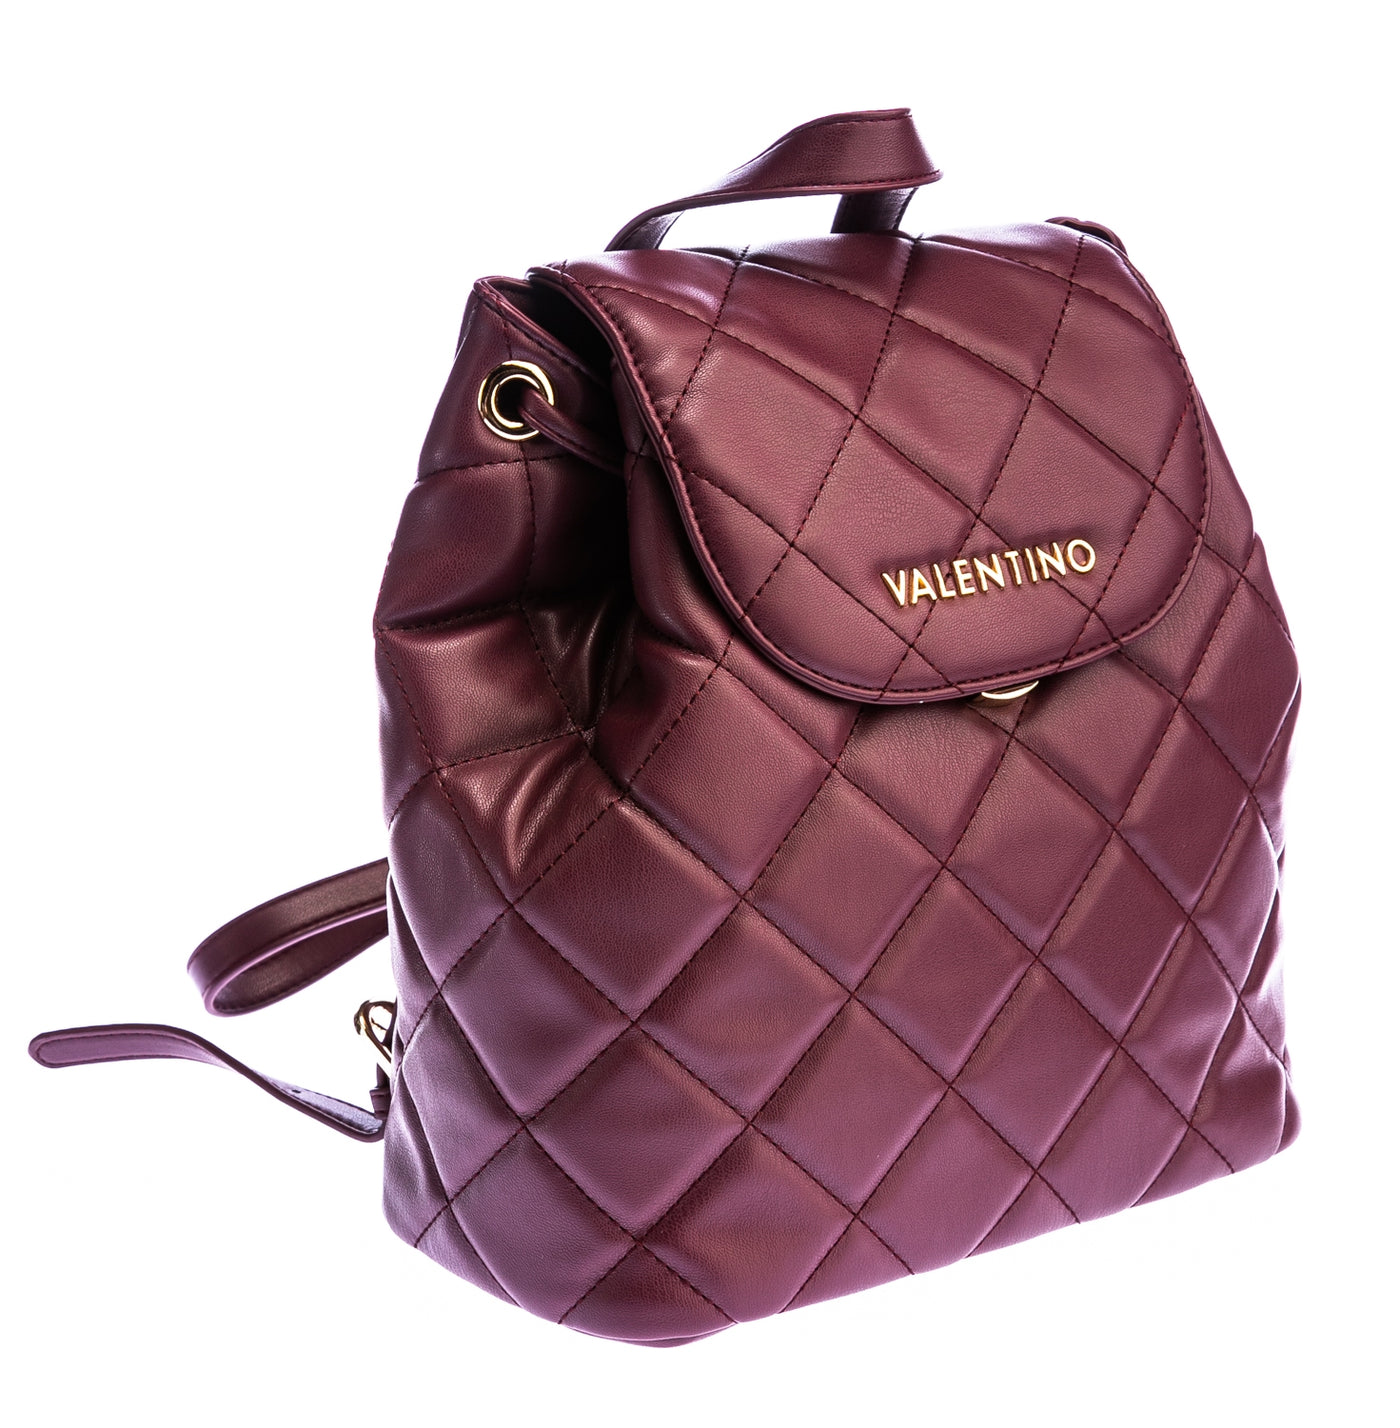 Valentino by Mario Valentino Ocarina Ladies Backpack in Wine